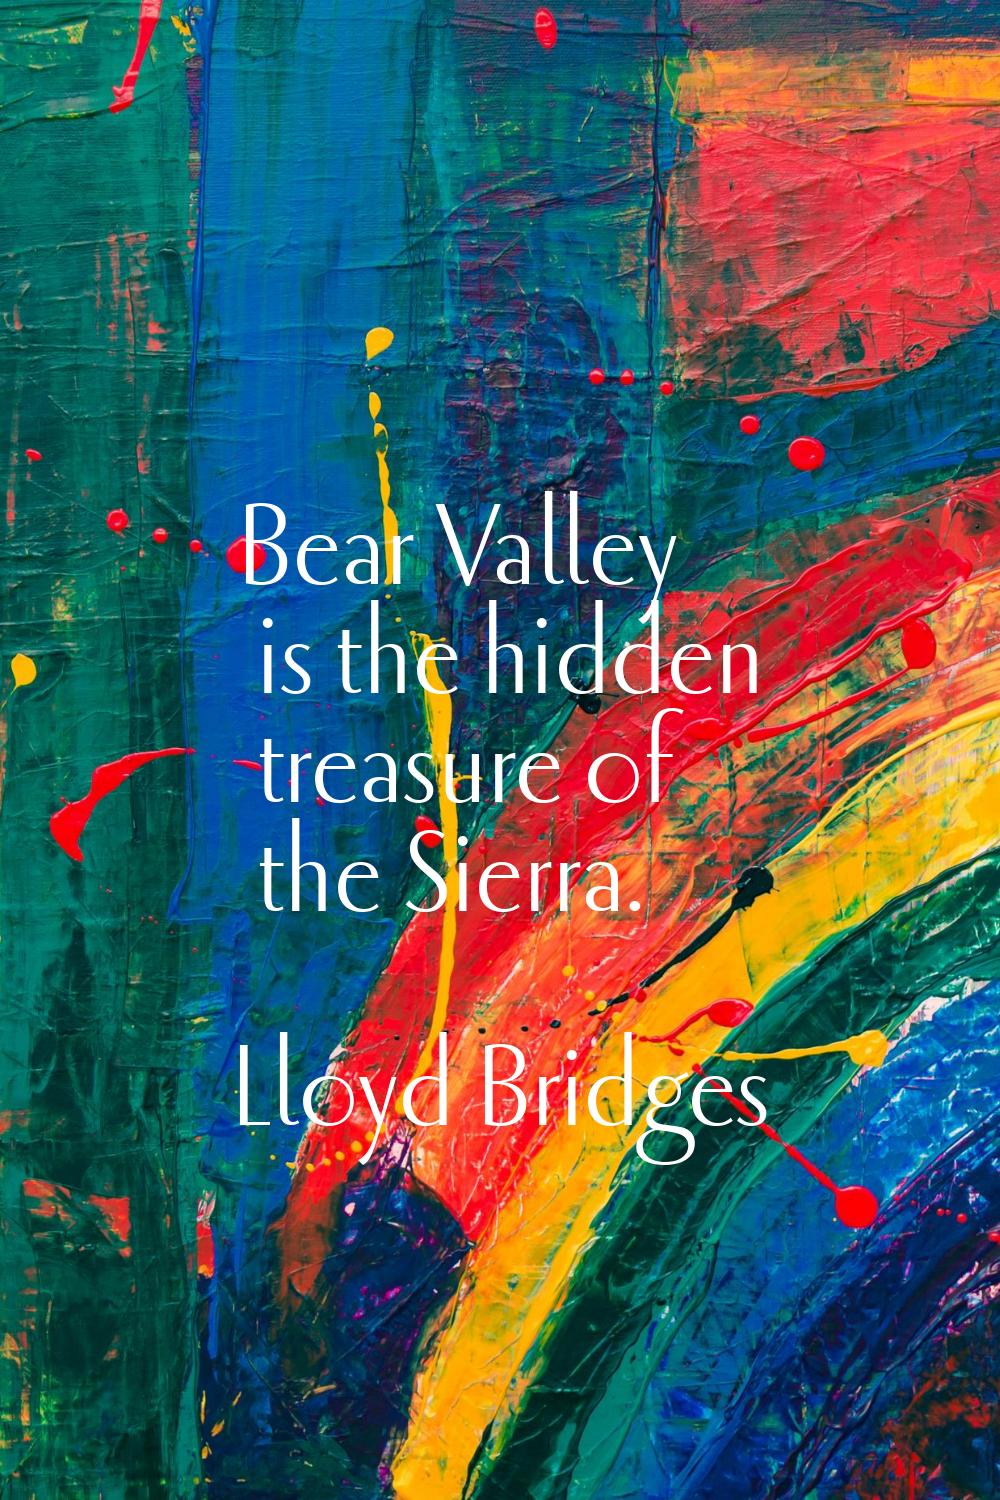 Bear Valley is the hidden treasure of the Sierra.